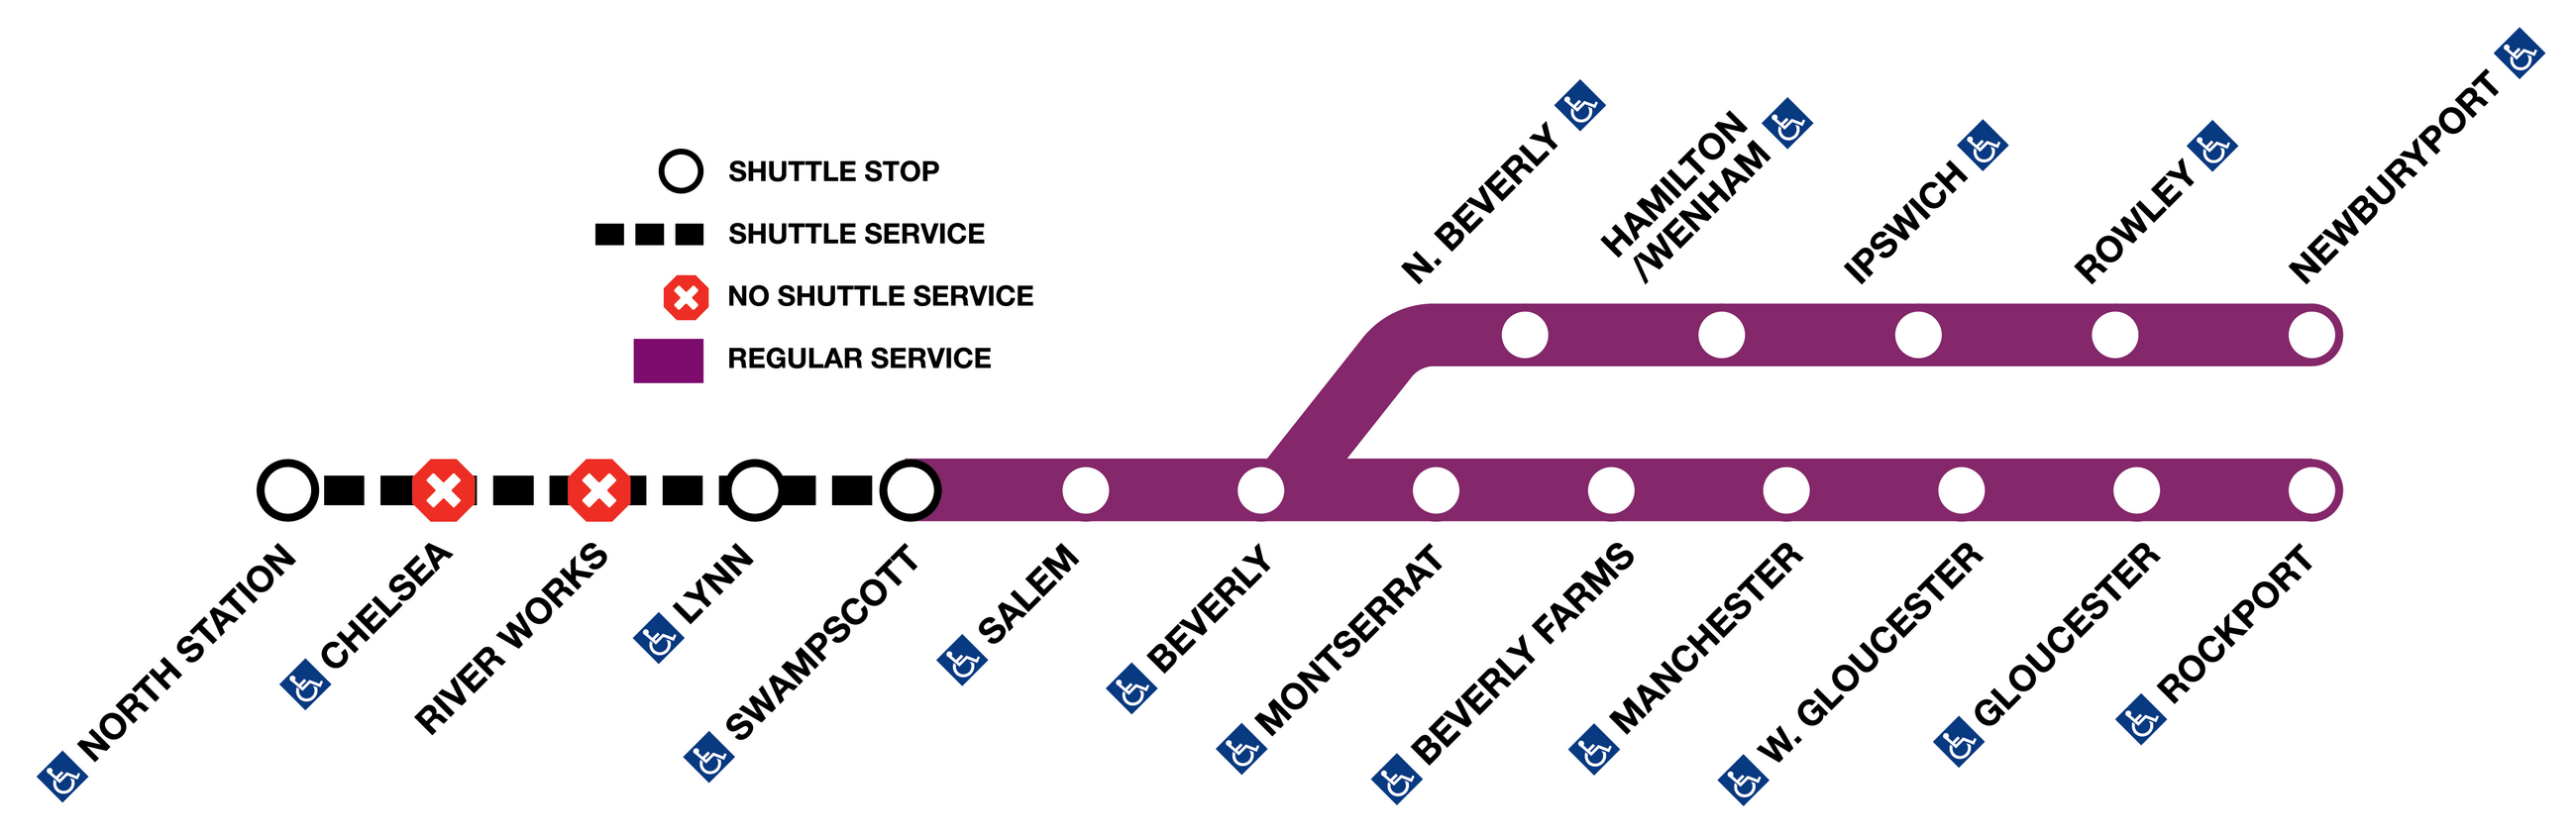 Shuttle service graphic for the Newburyport/Rockport North Station to Swampscott diversion